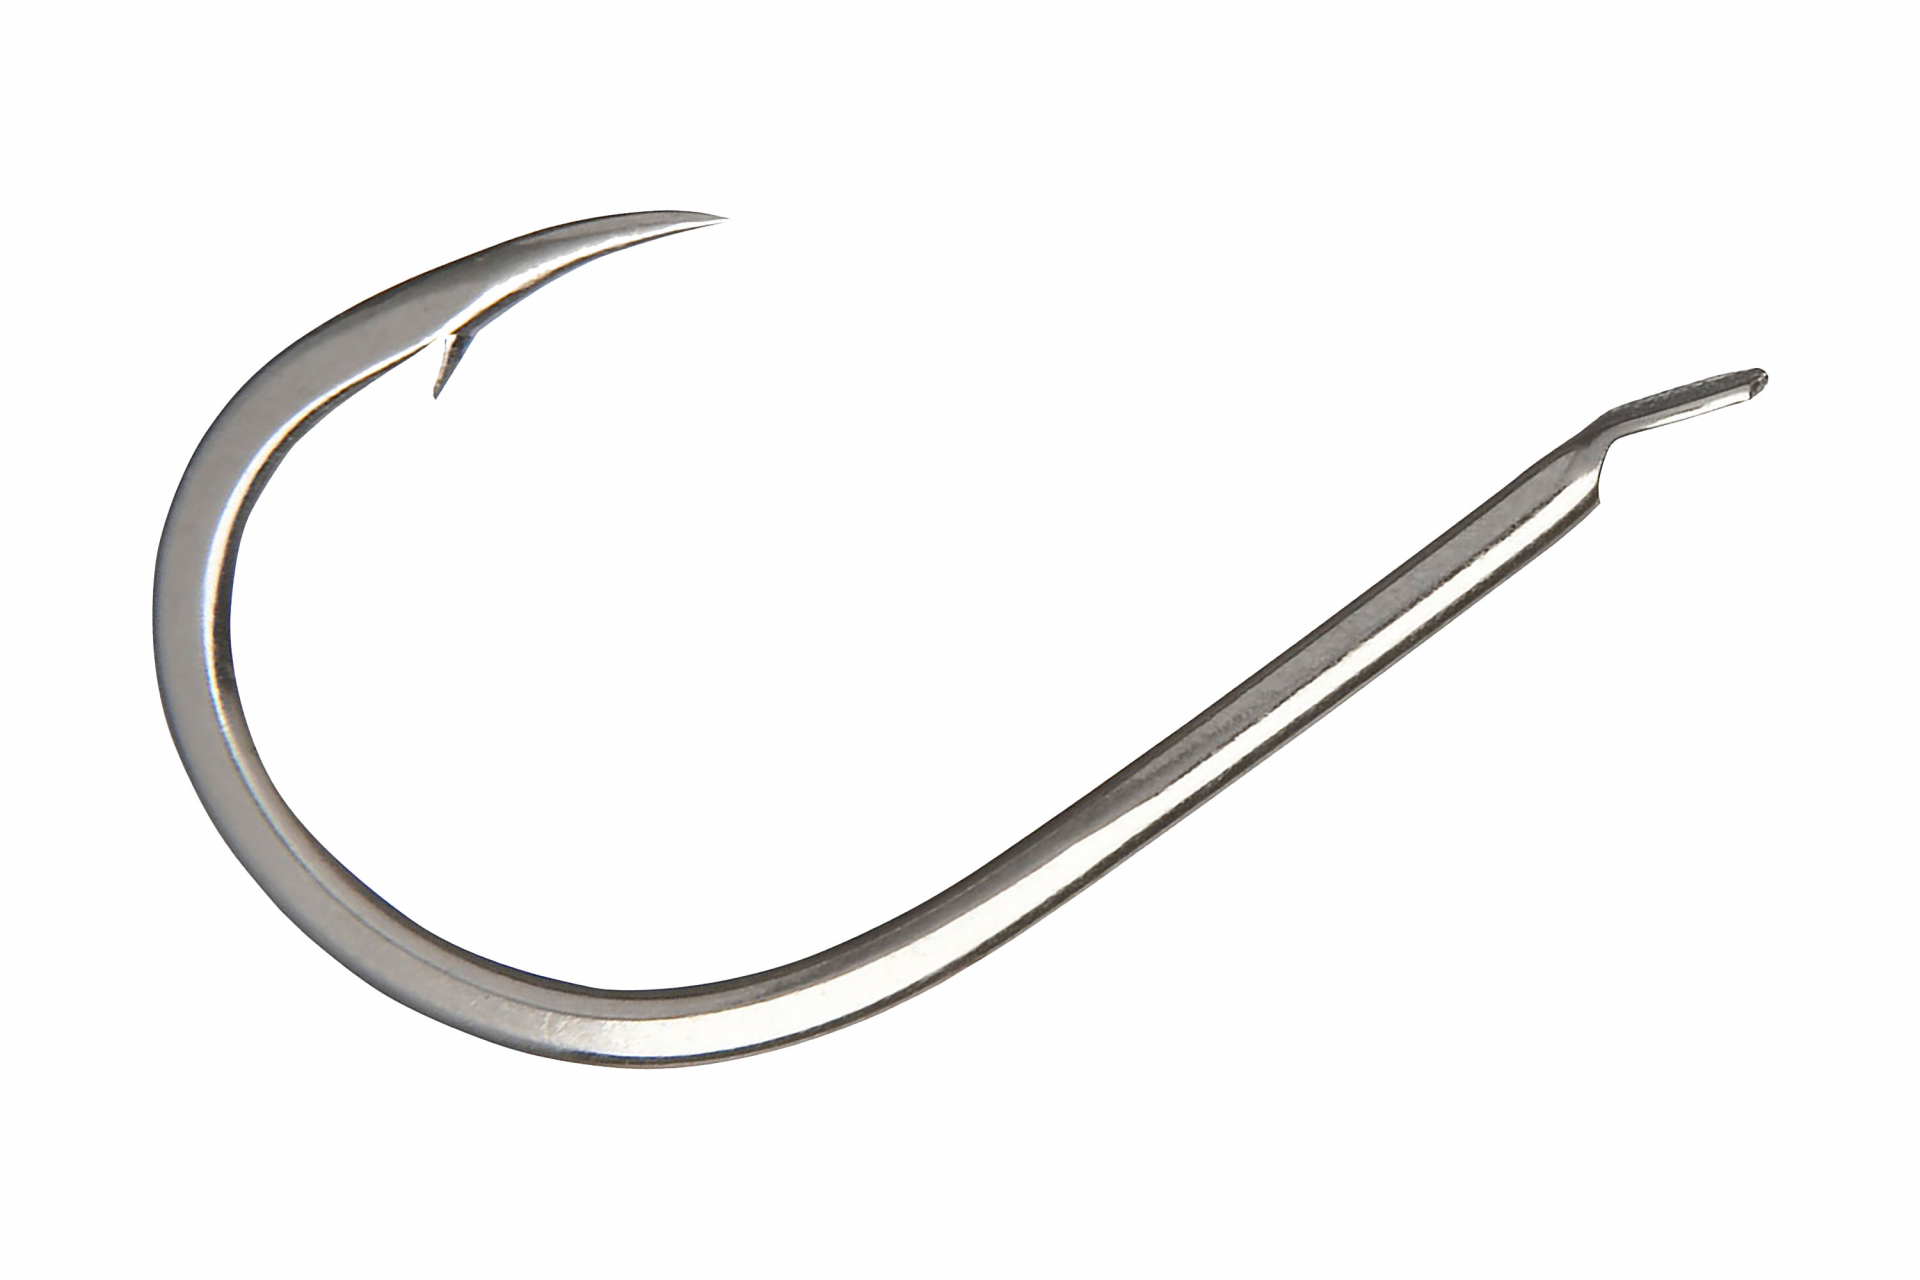 Tournament Zander Hooks <span>| Hook color silver | Length 70cm</span>